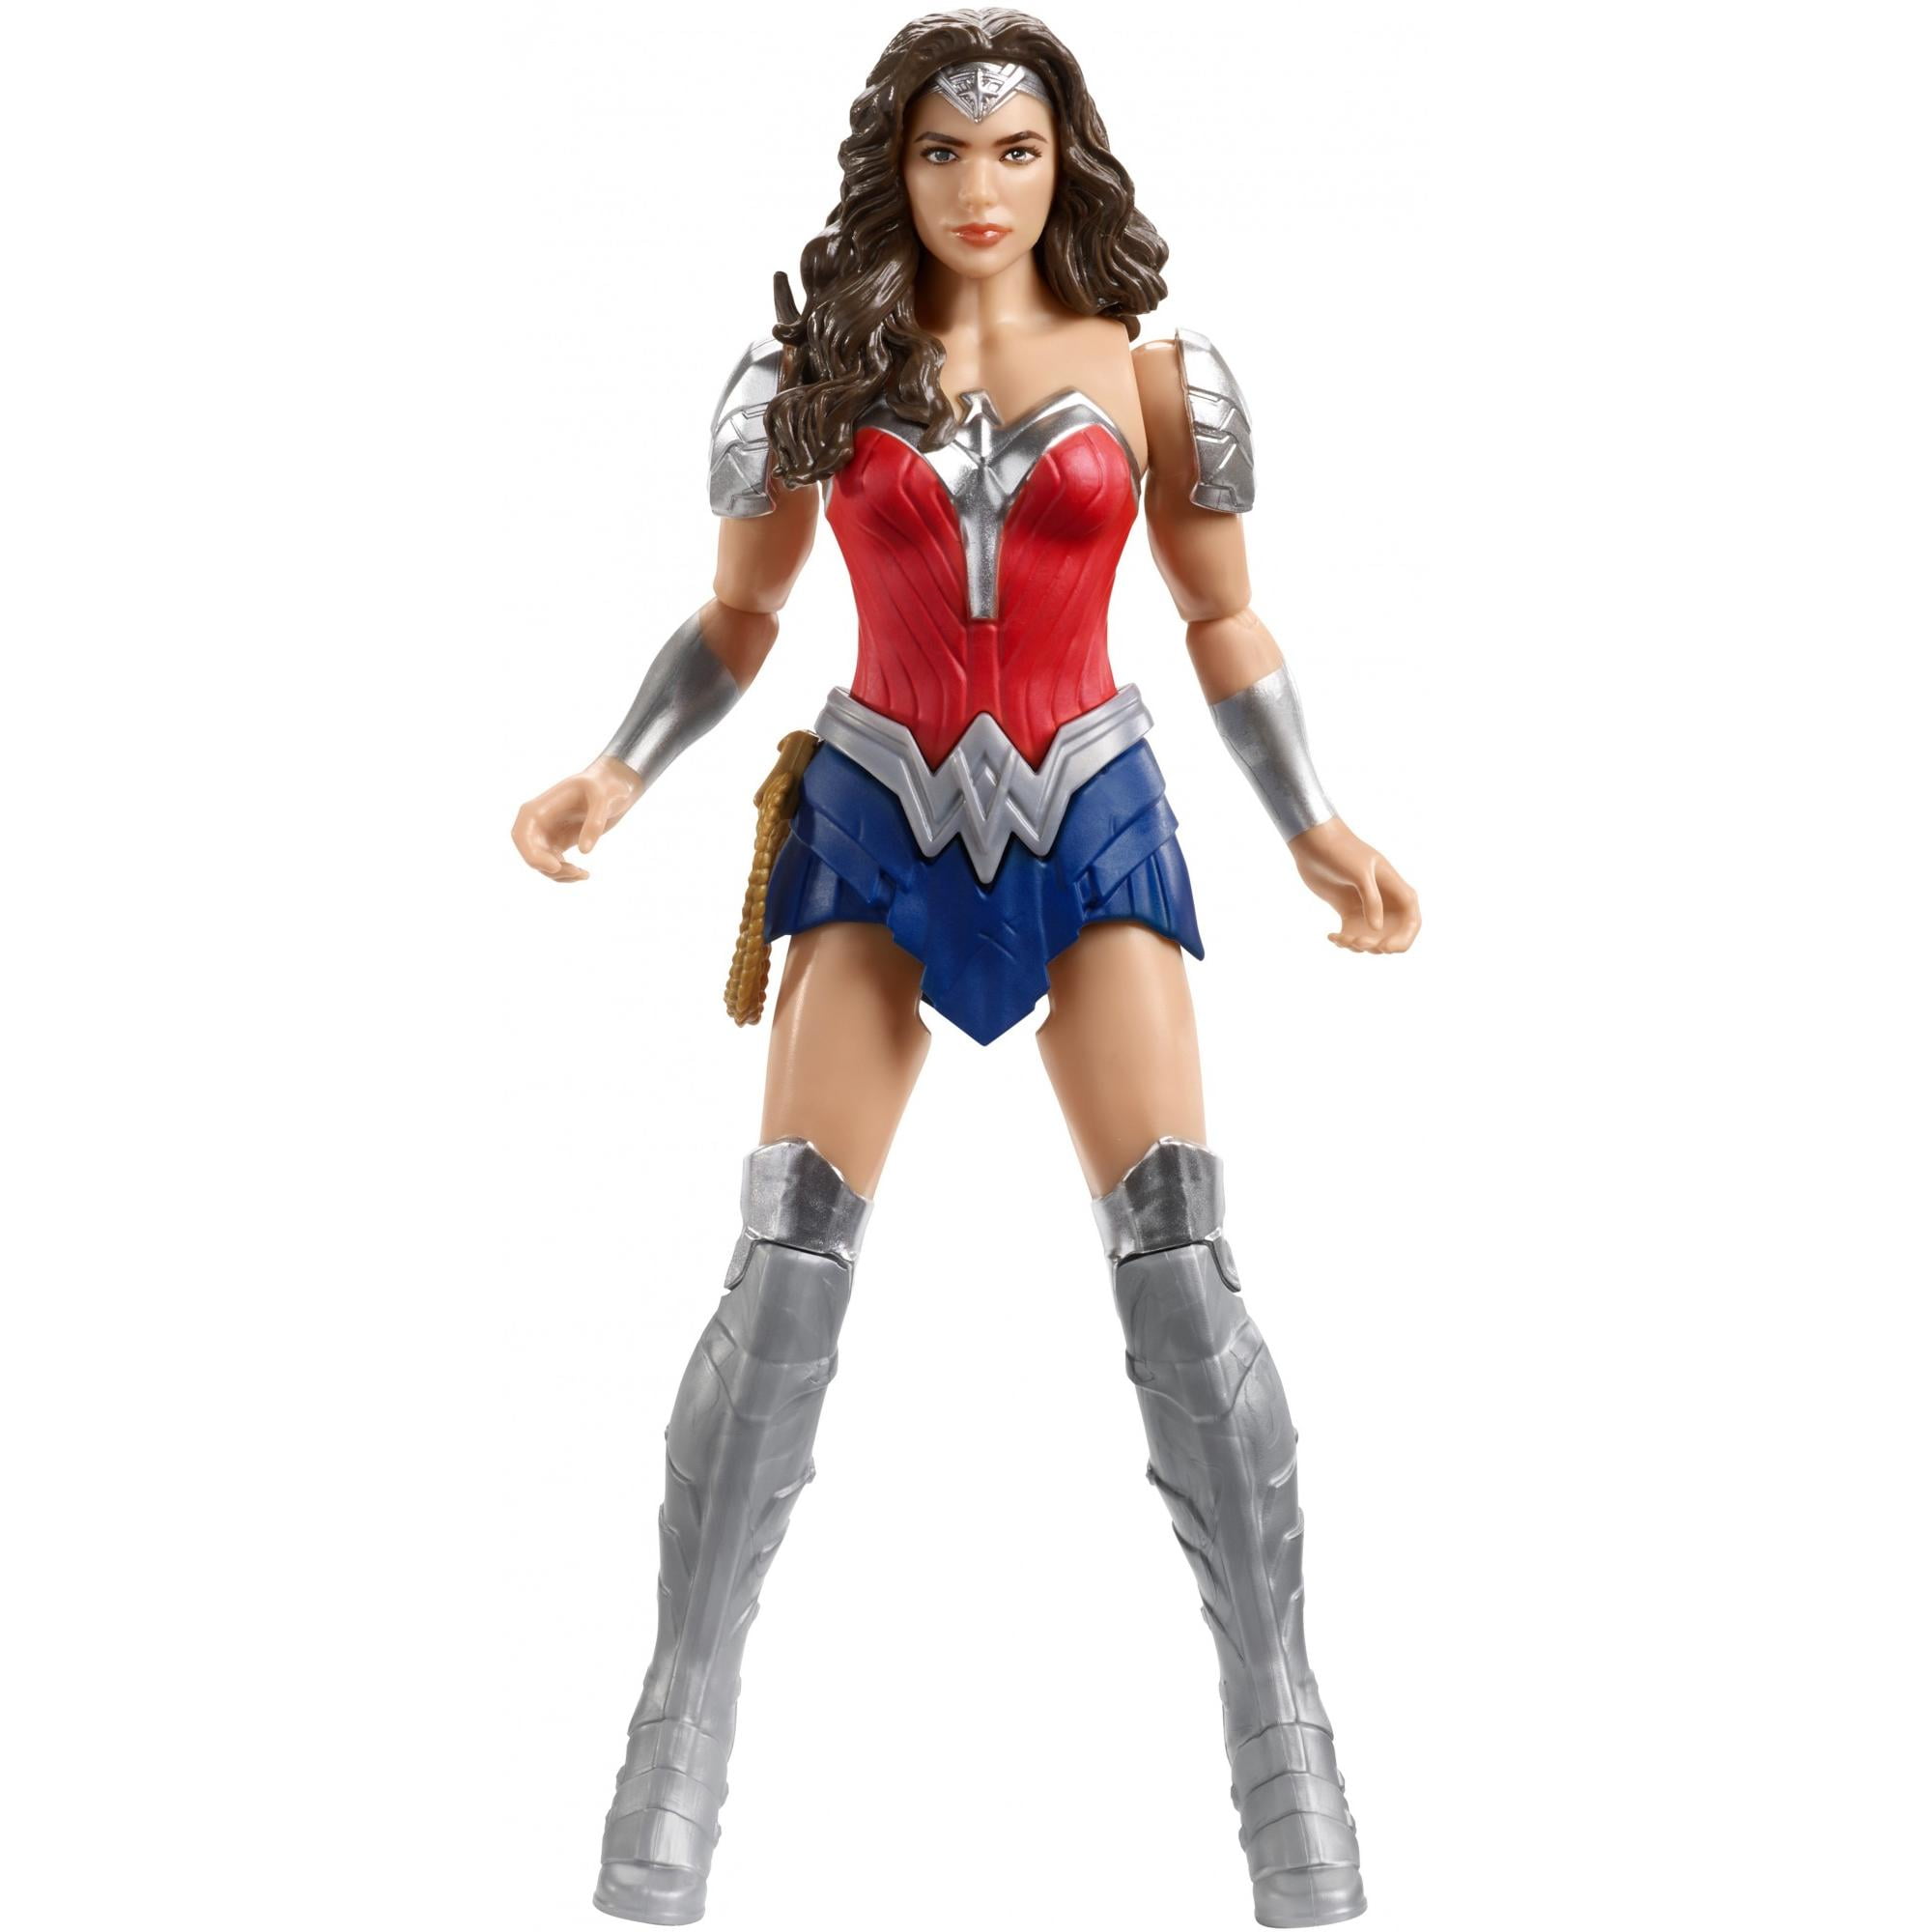 DC Justice League WONDER WOMAN METALLIC ARMOR 12" Inch Scale Figure Mattel 